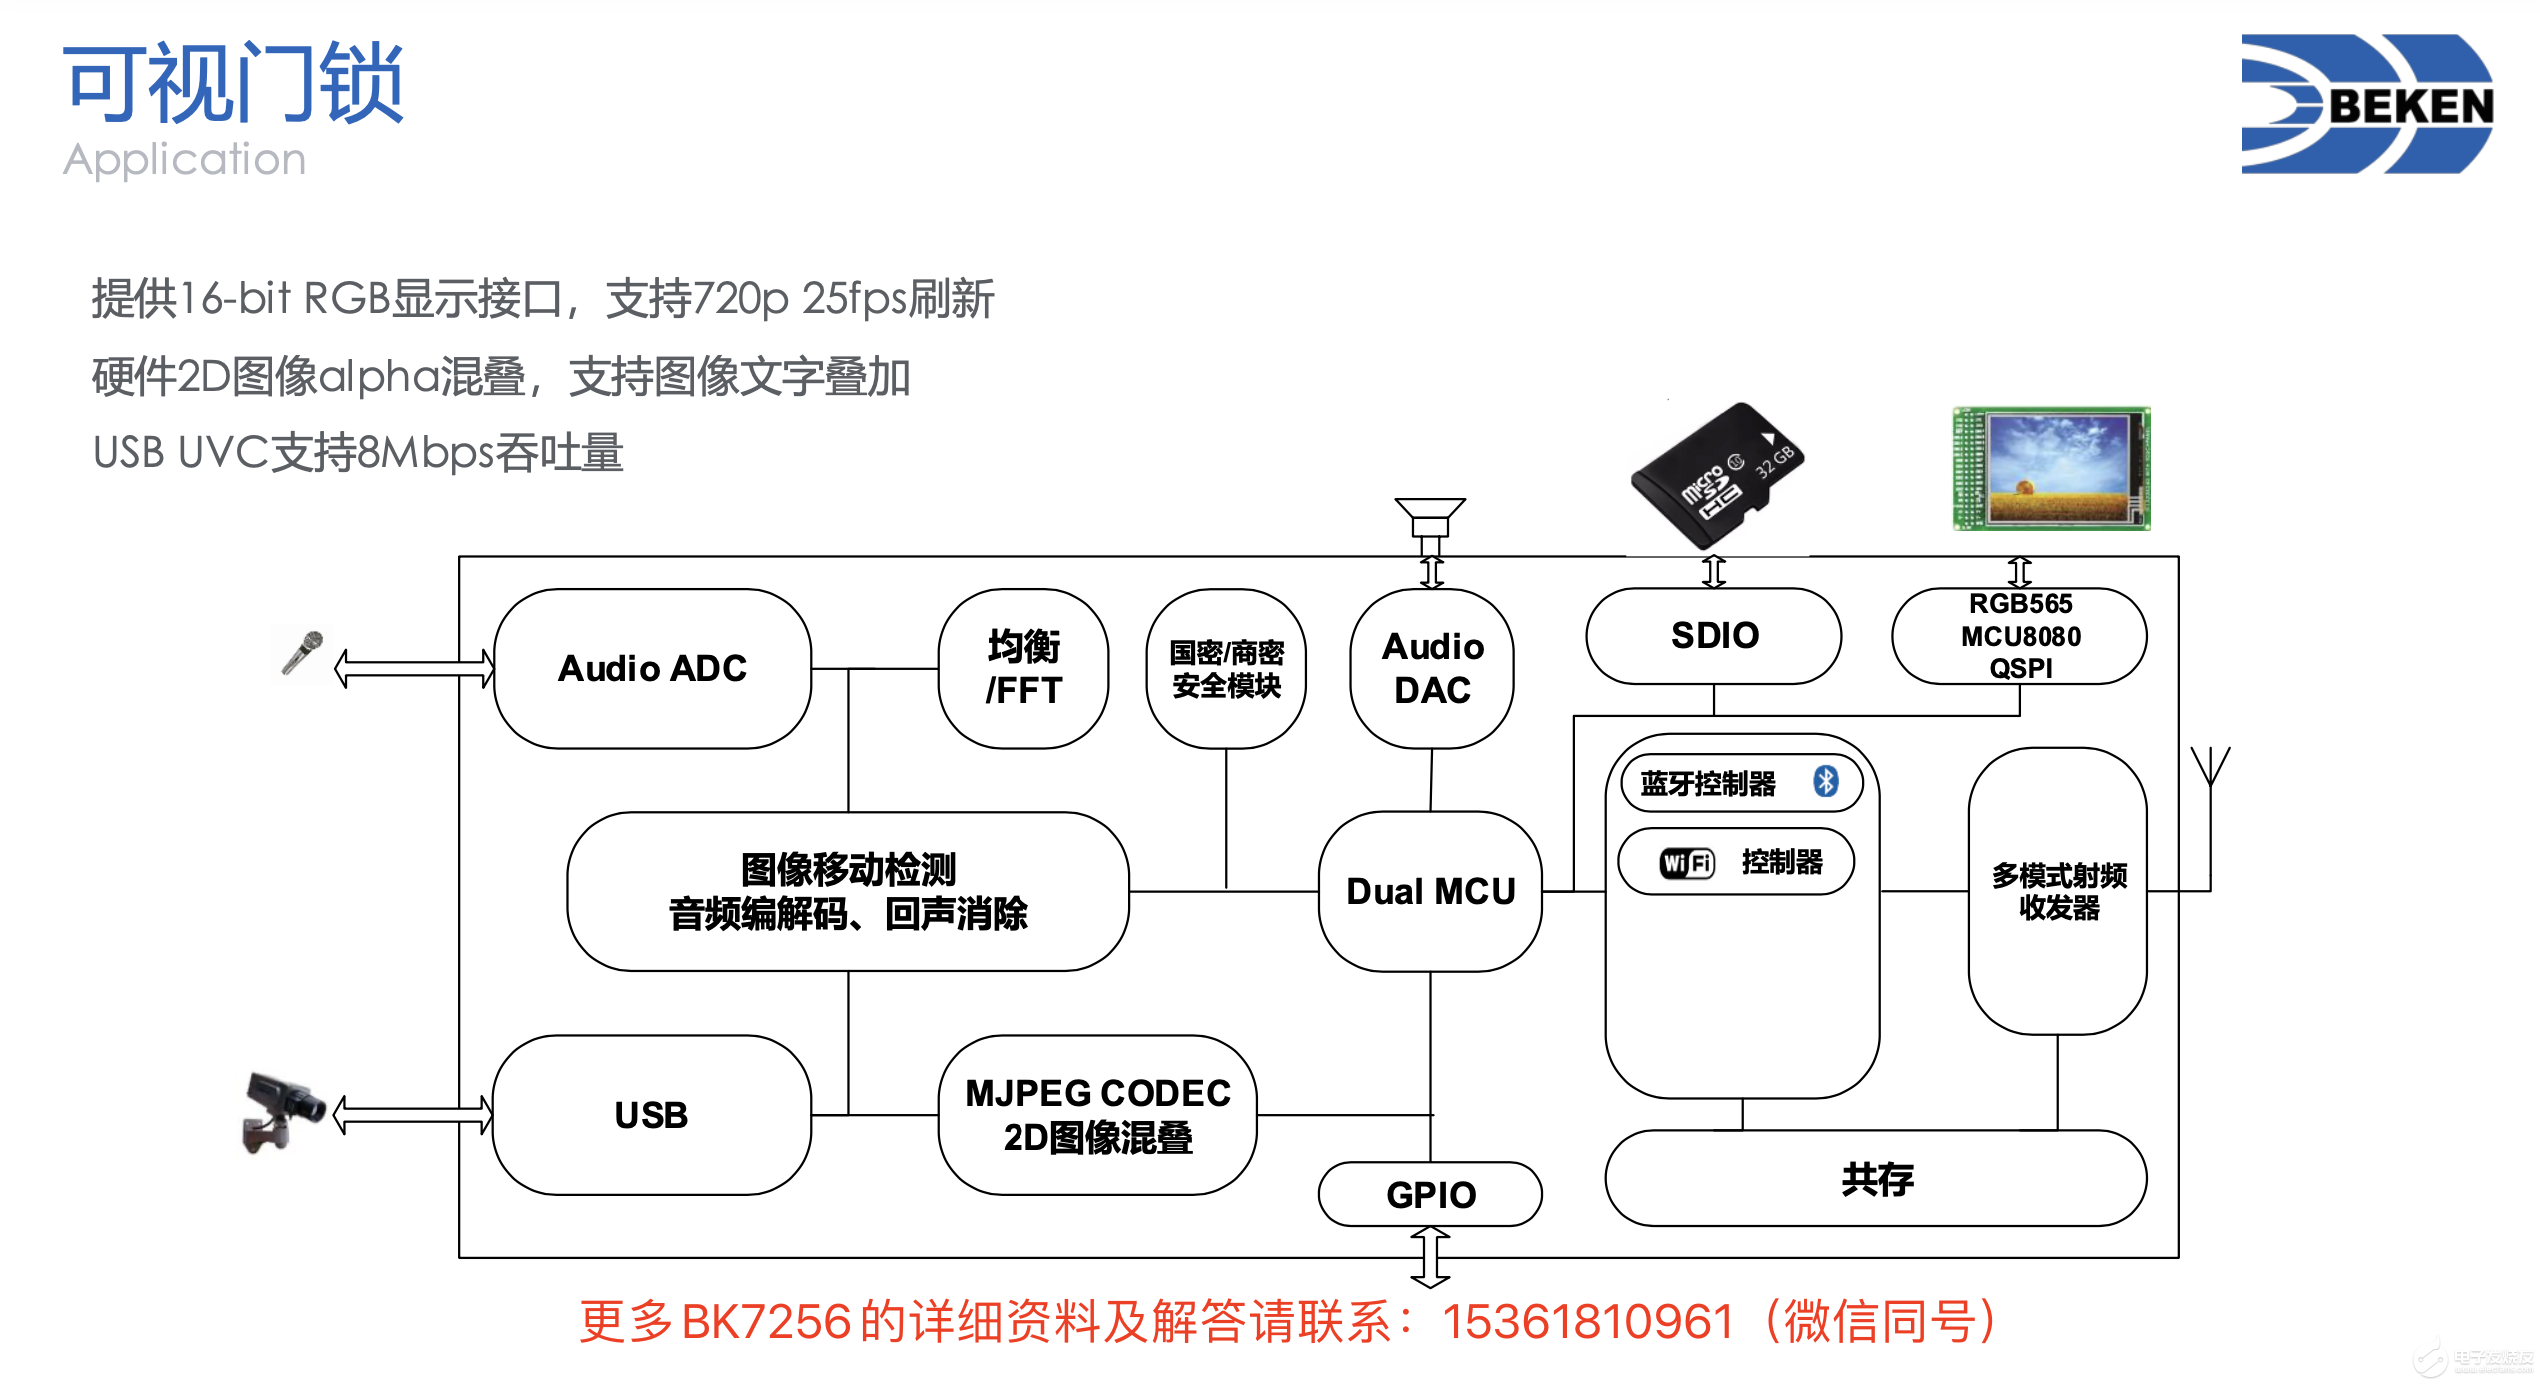 BK7256-上海博通Wi-Fi+藍牙soc音視頻芯片，單芯片集成dsp，flash，psram，Wi-Fi+藍牙